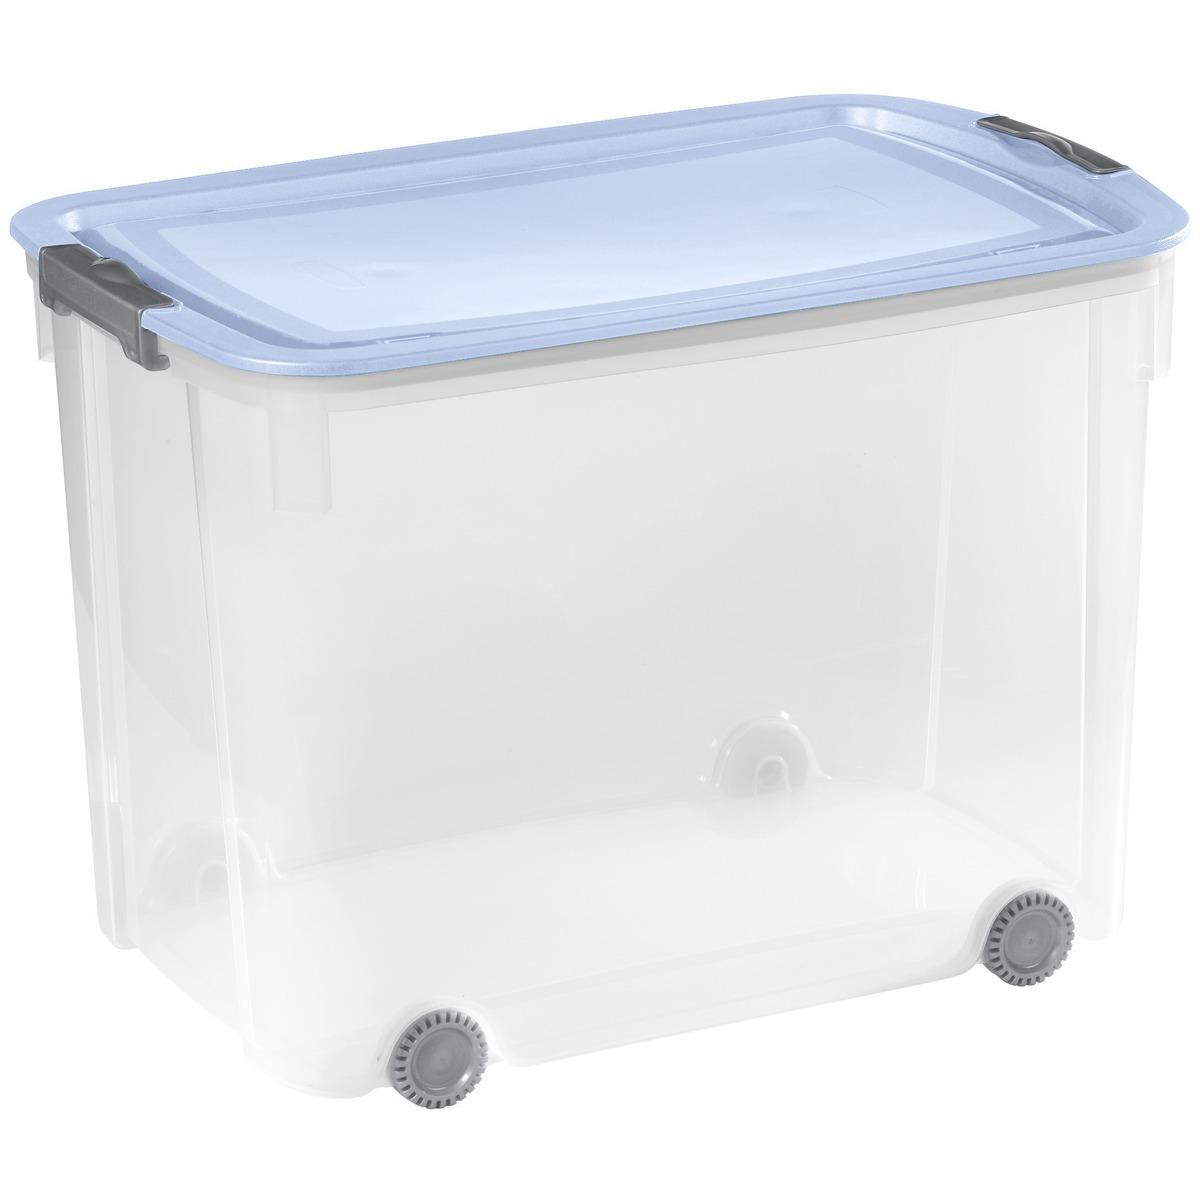 Box de rangement 70 litres Allibert en plastique avec roulettes - bleu, transparent